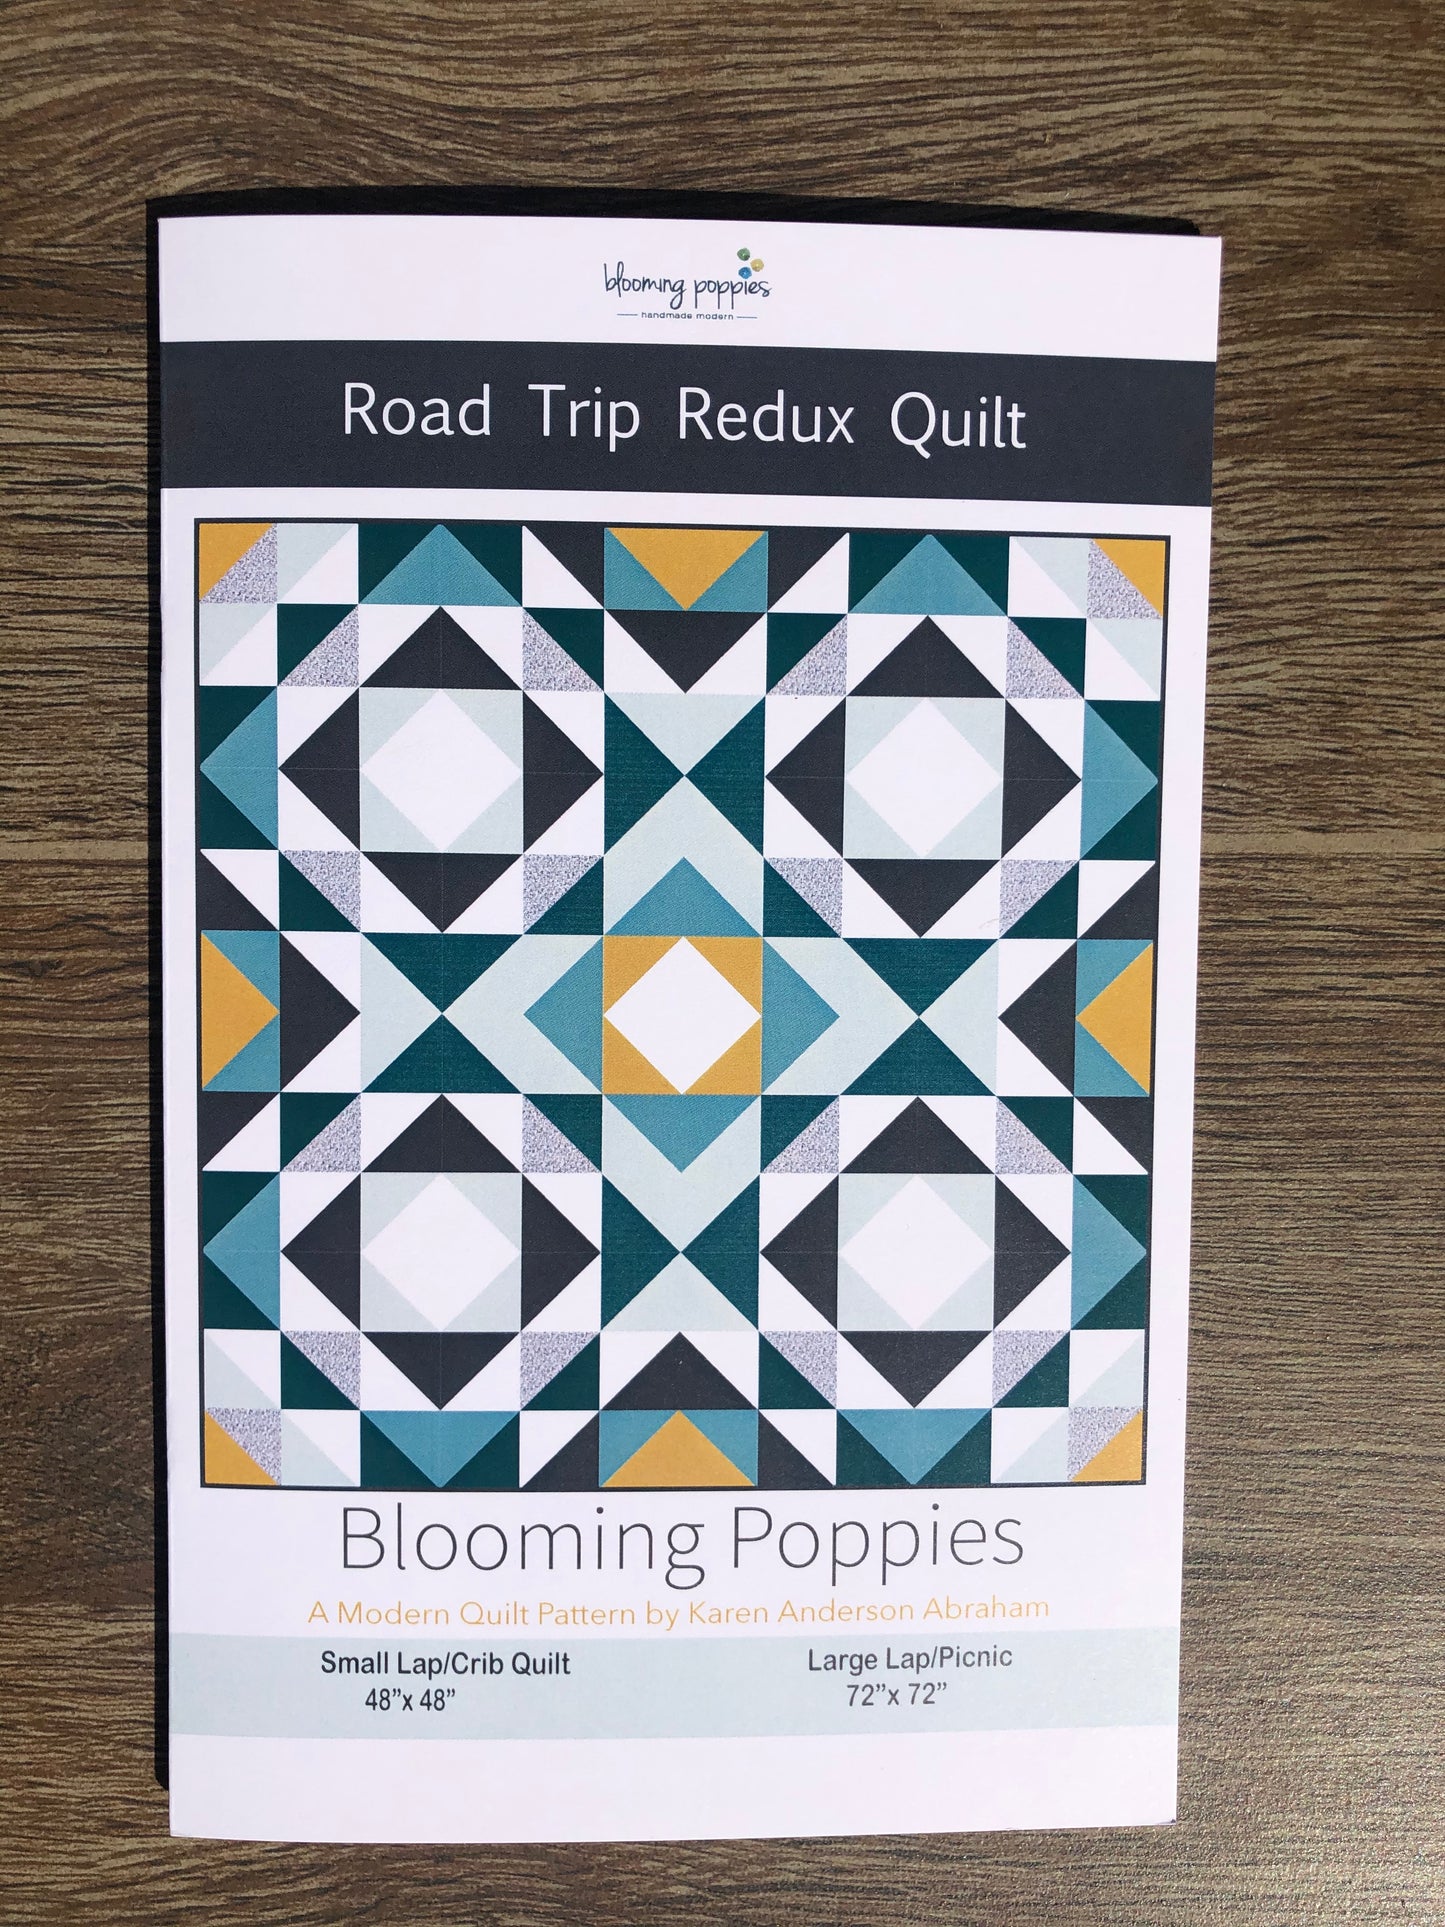 Road Trip Redux Paper Pattern Booklets